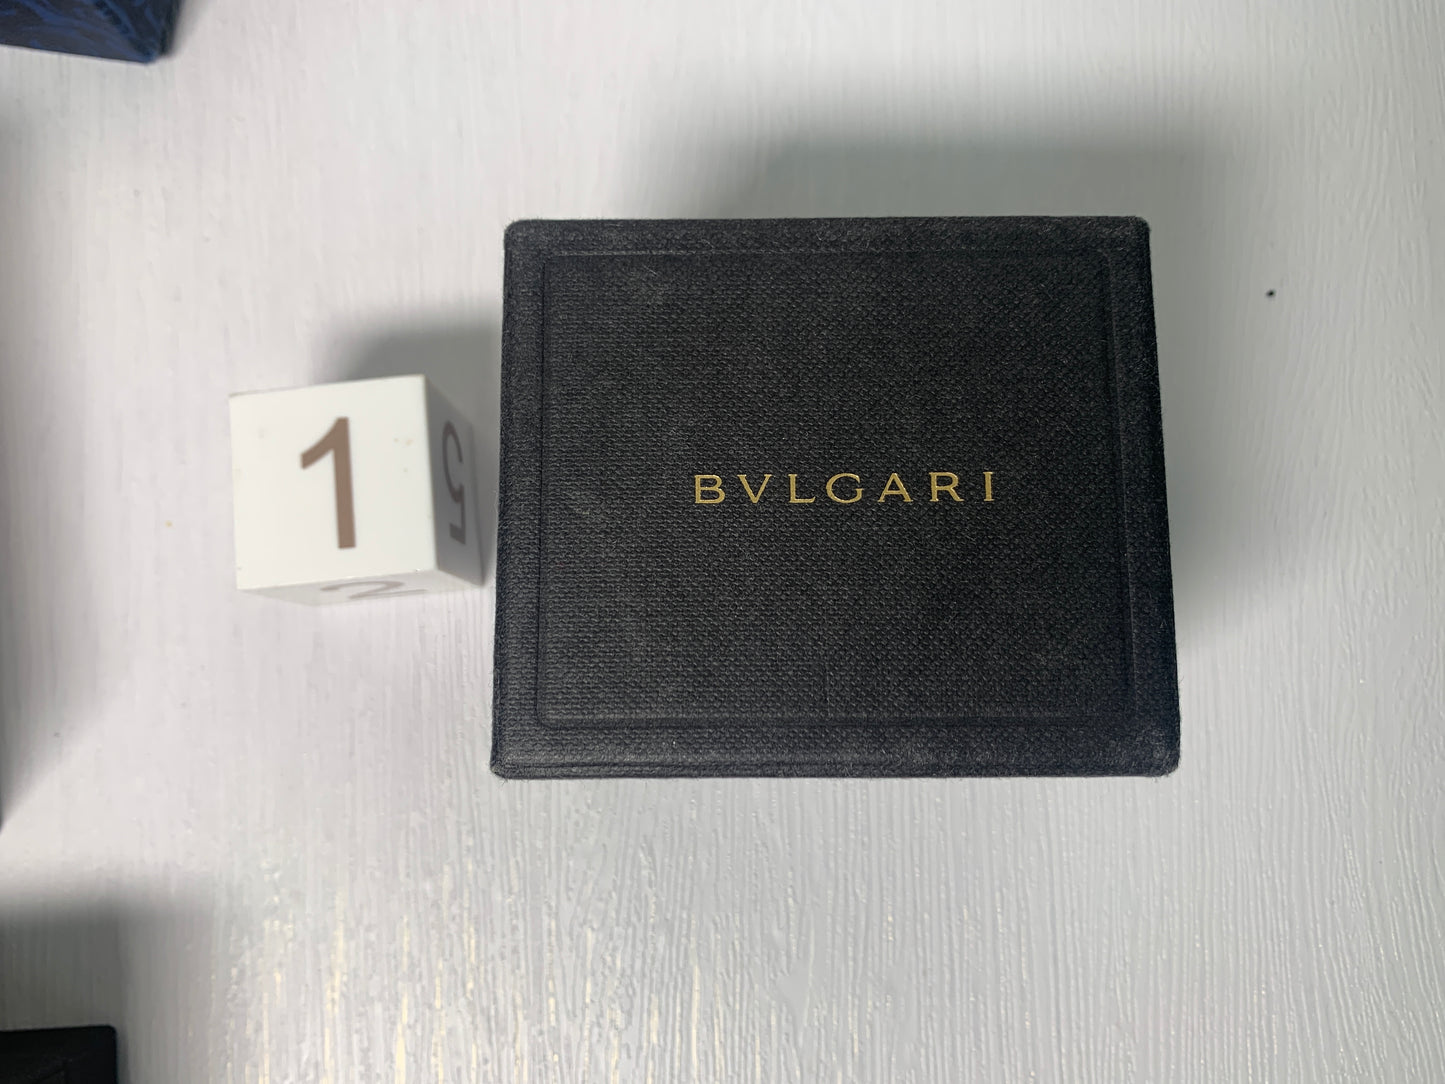 Gift Box Bvlgari Sette Celine BV mikimoto gemcerey for wallet scarf belt bag - 9NOV